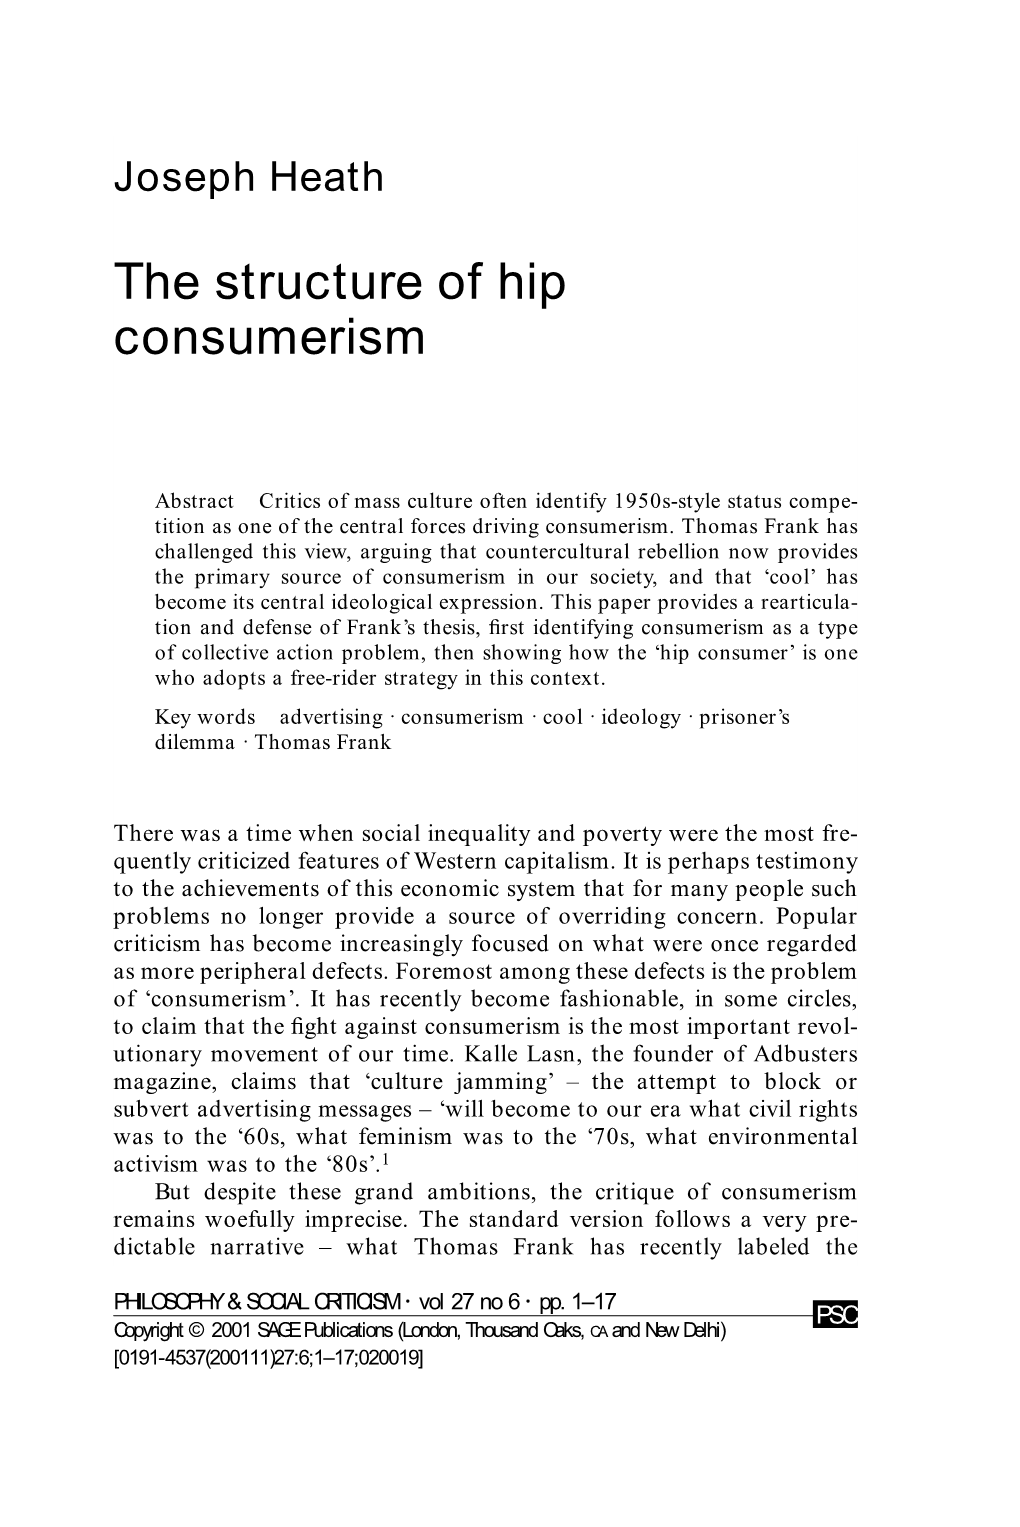 The Structure of Hip Consumerism